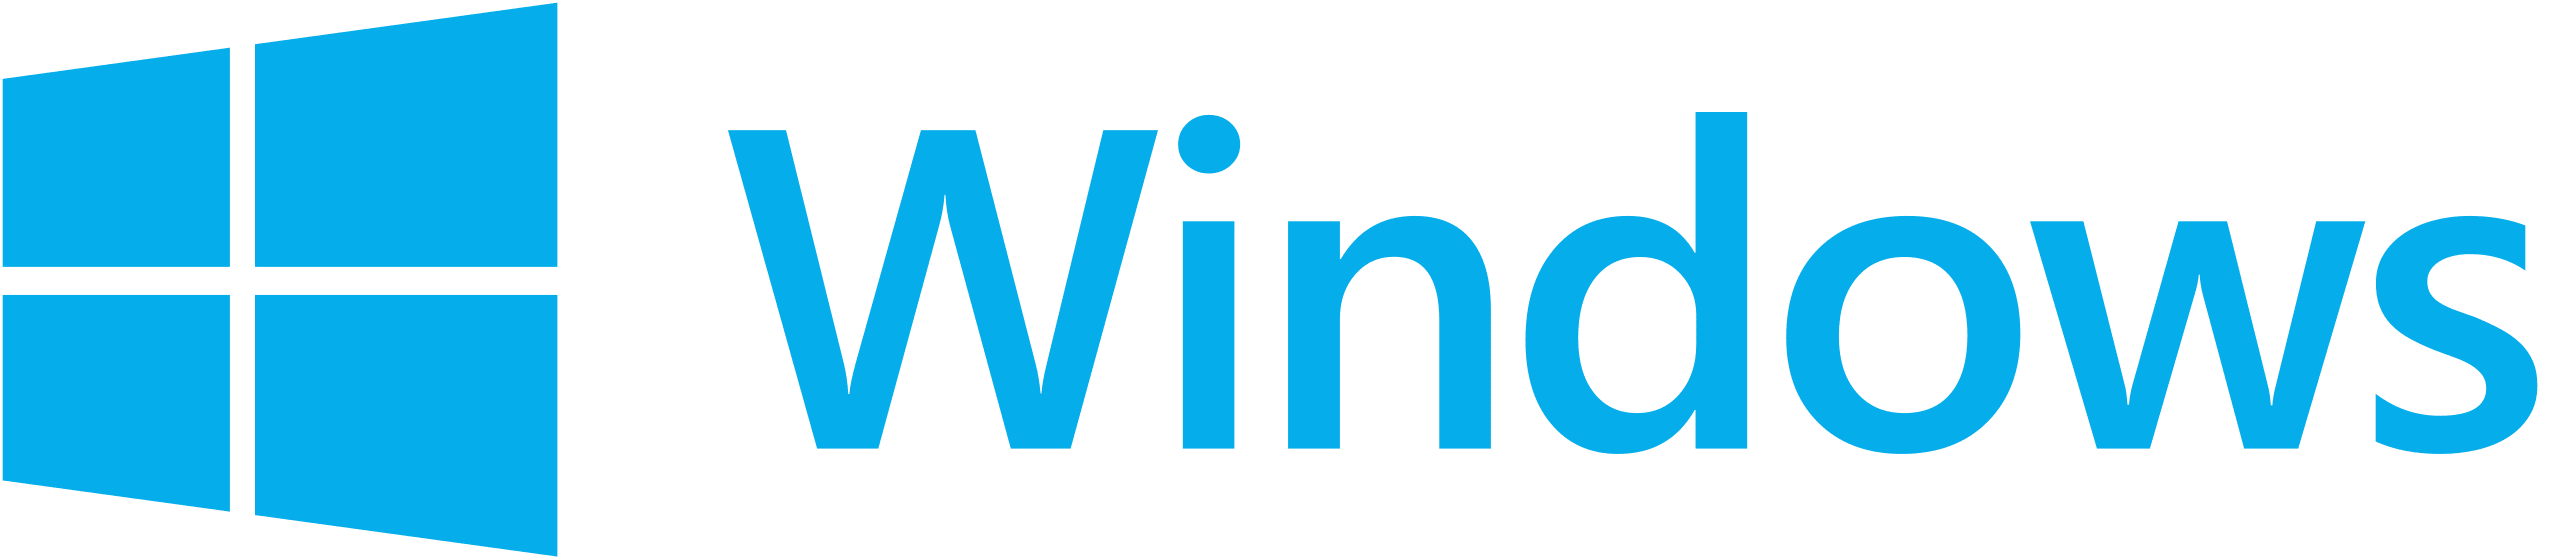 windows logo besturingssysteem